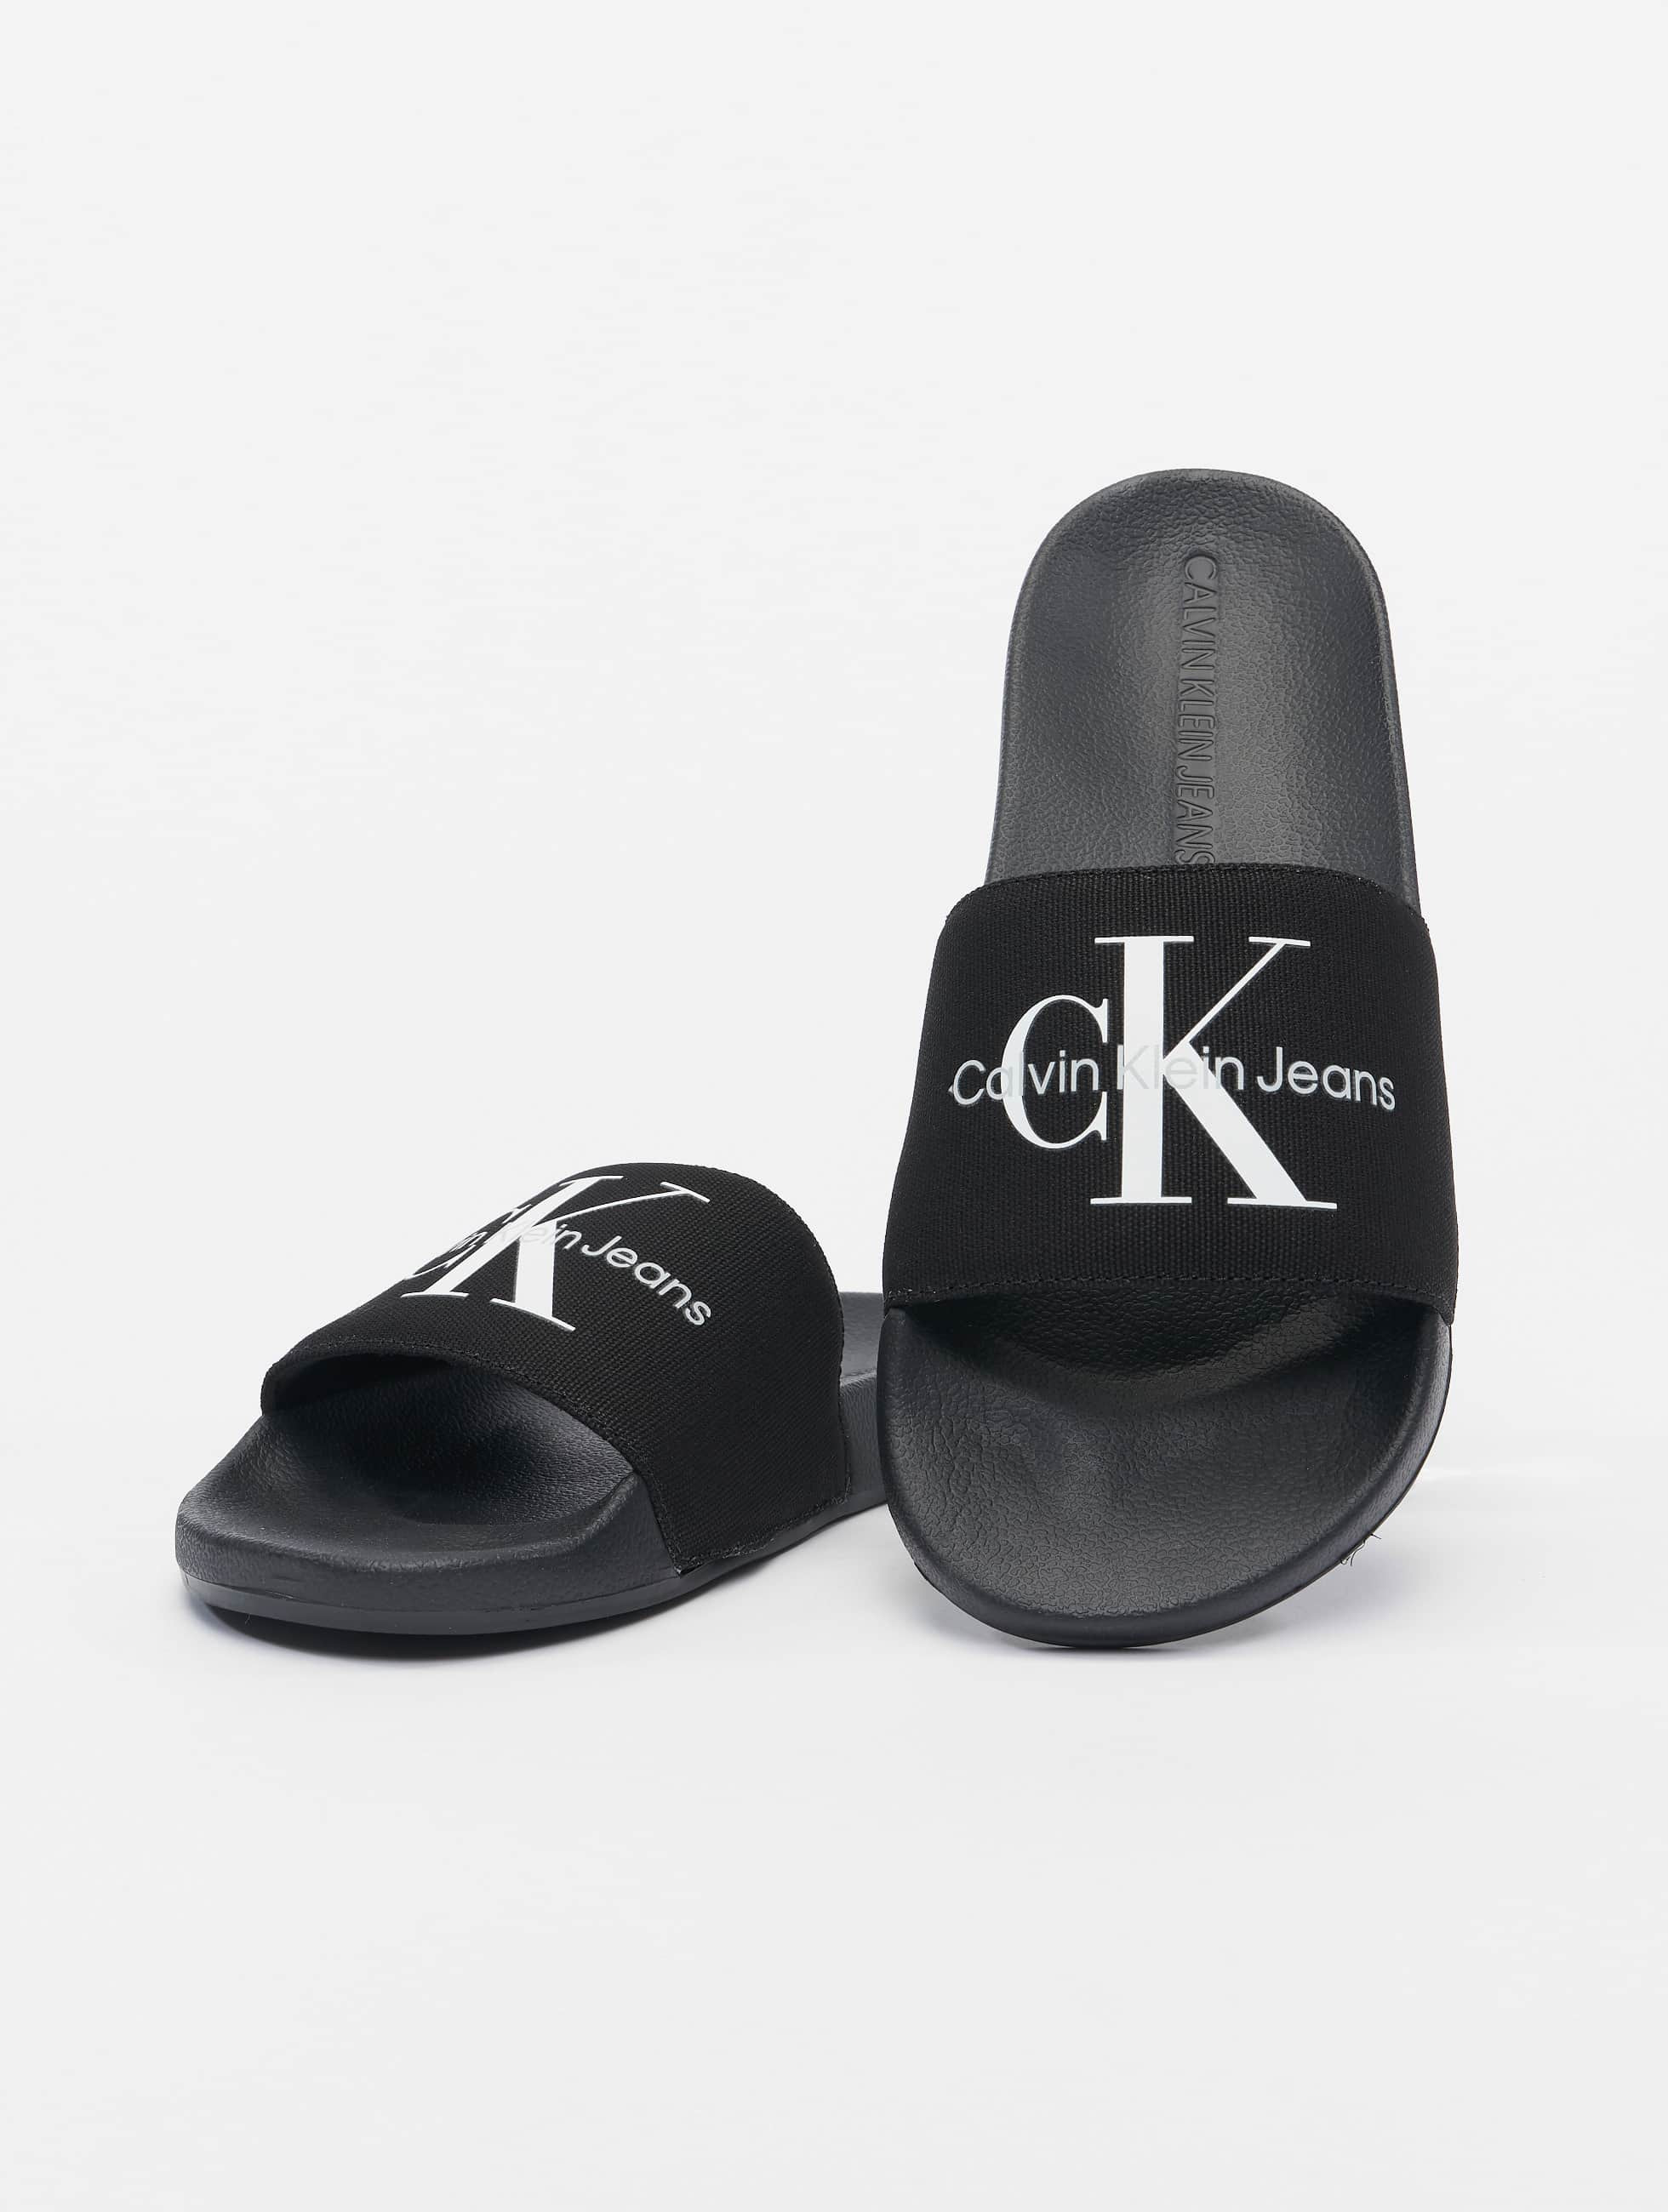 Sko / Badesko/sandaler i svart 973111